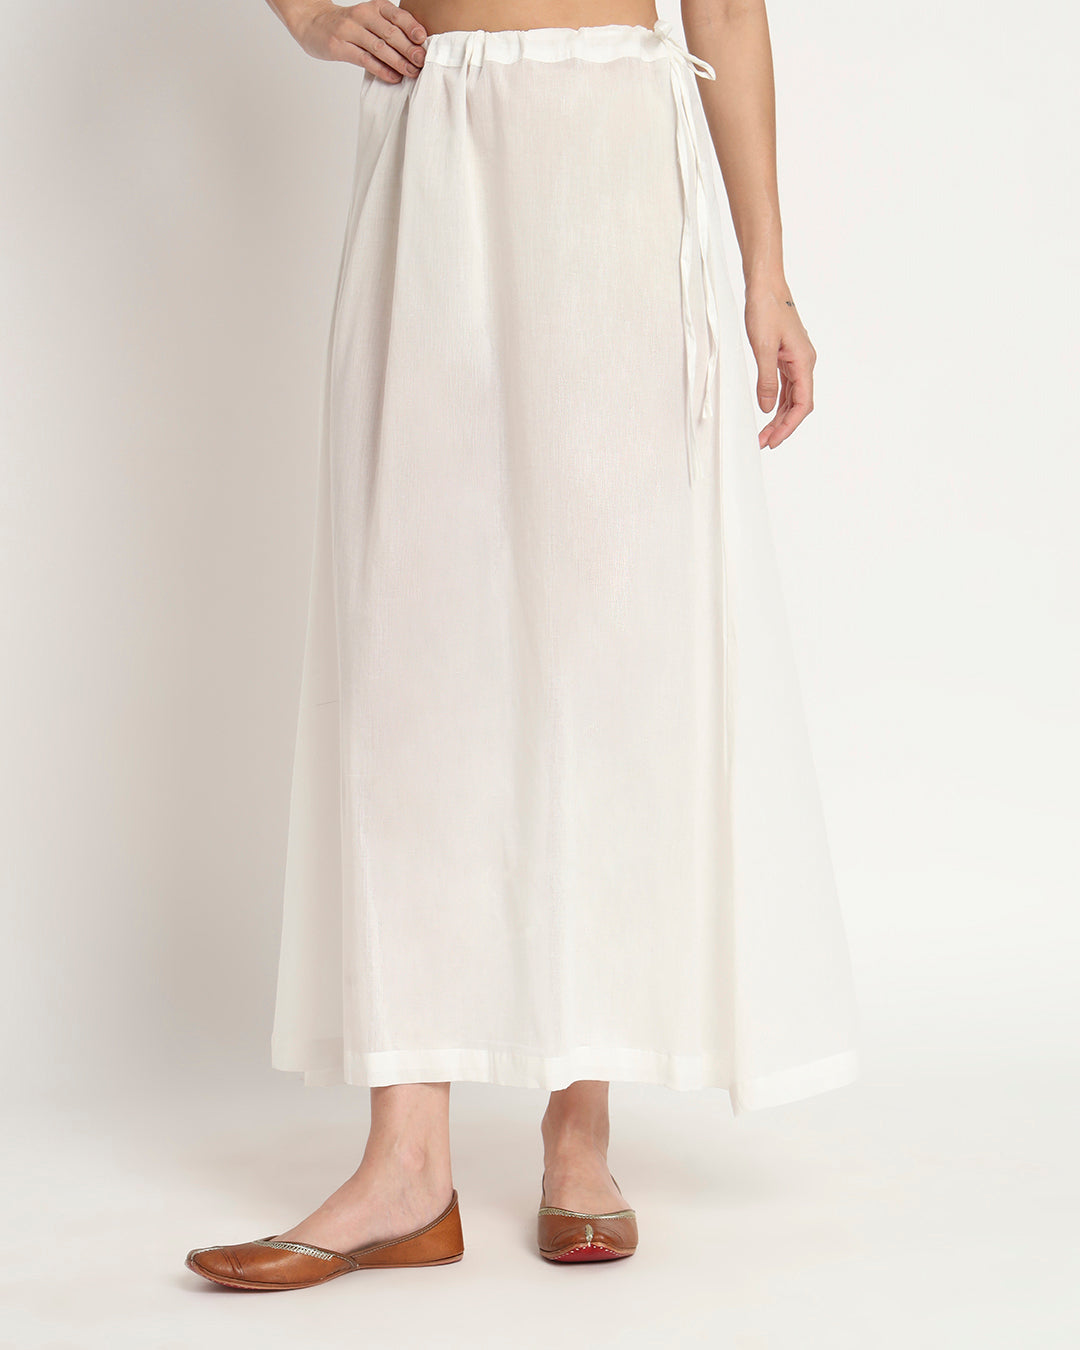 Pristine White Peekaboo Petticoat